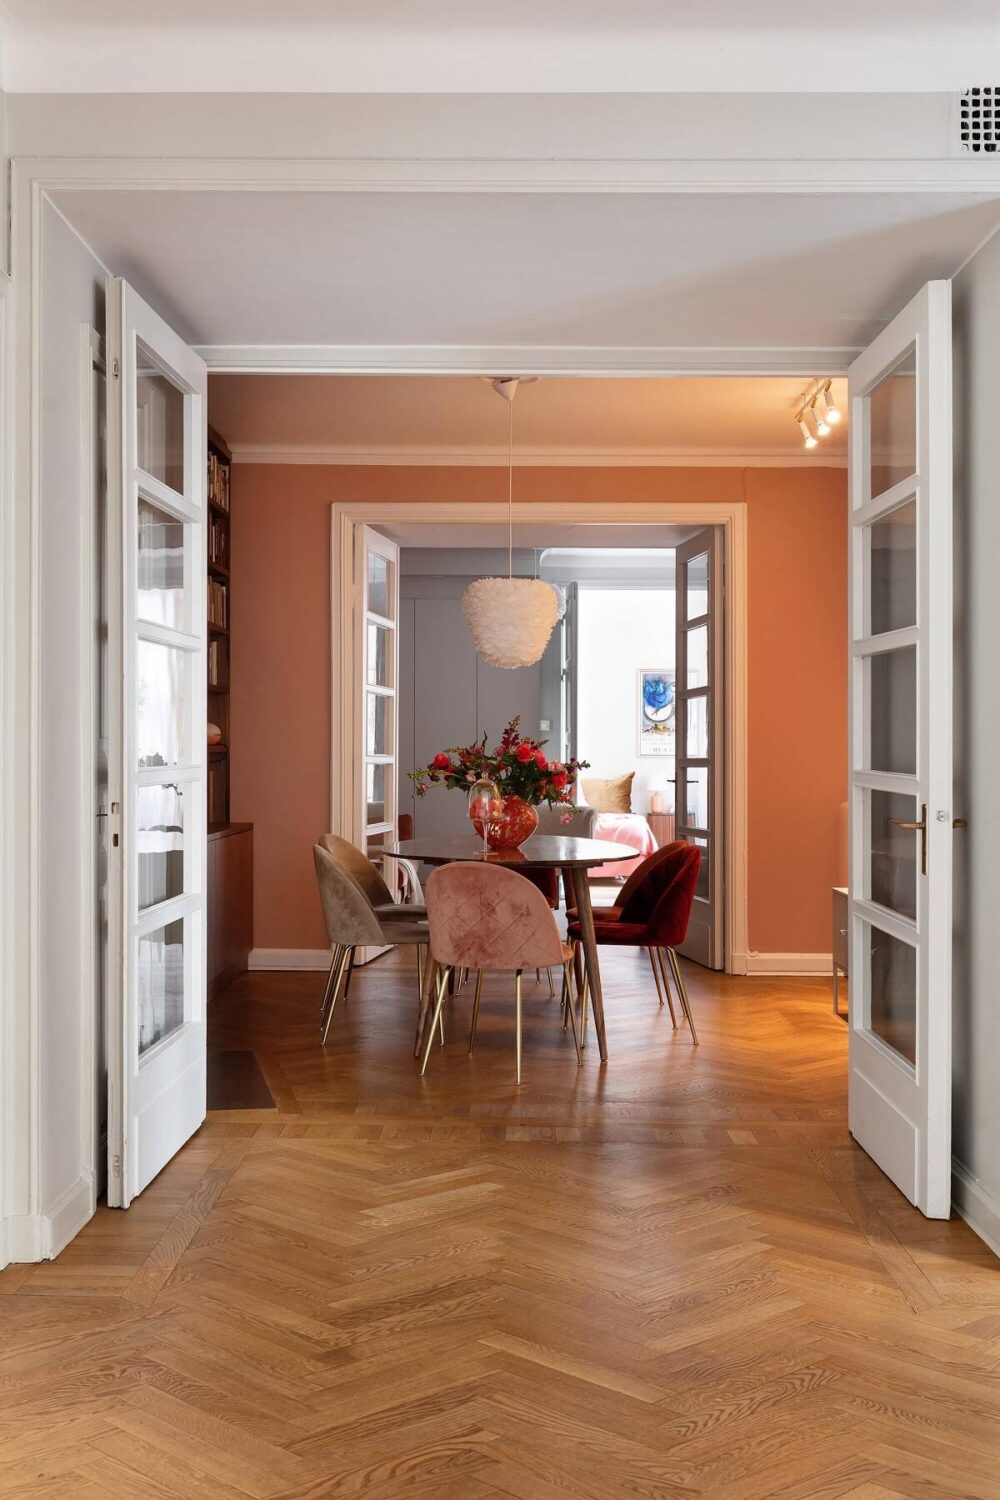 dining-room-terracotta-wall-paint-wooden-floor-nordroom